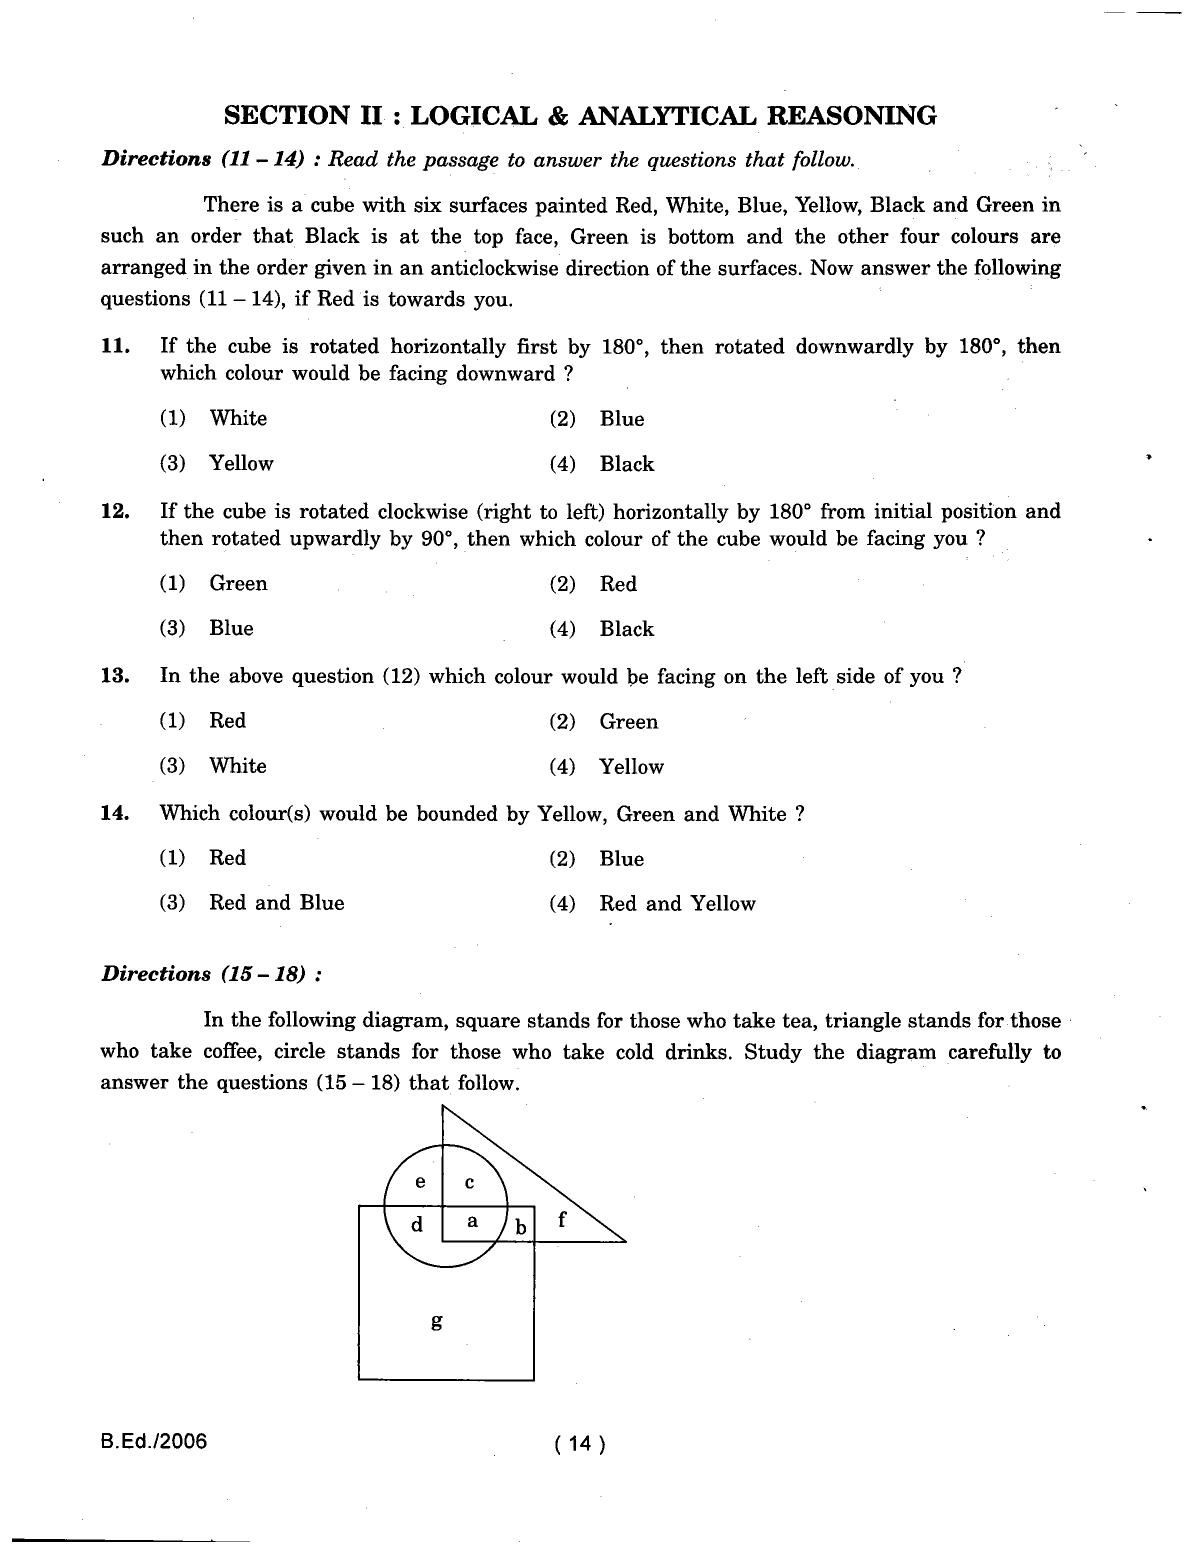 IGNOU B.Ed 2006 Question Paper - Page 14